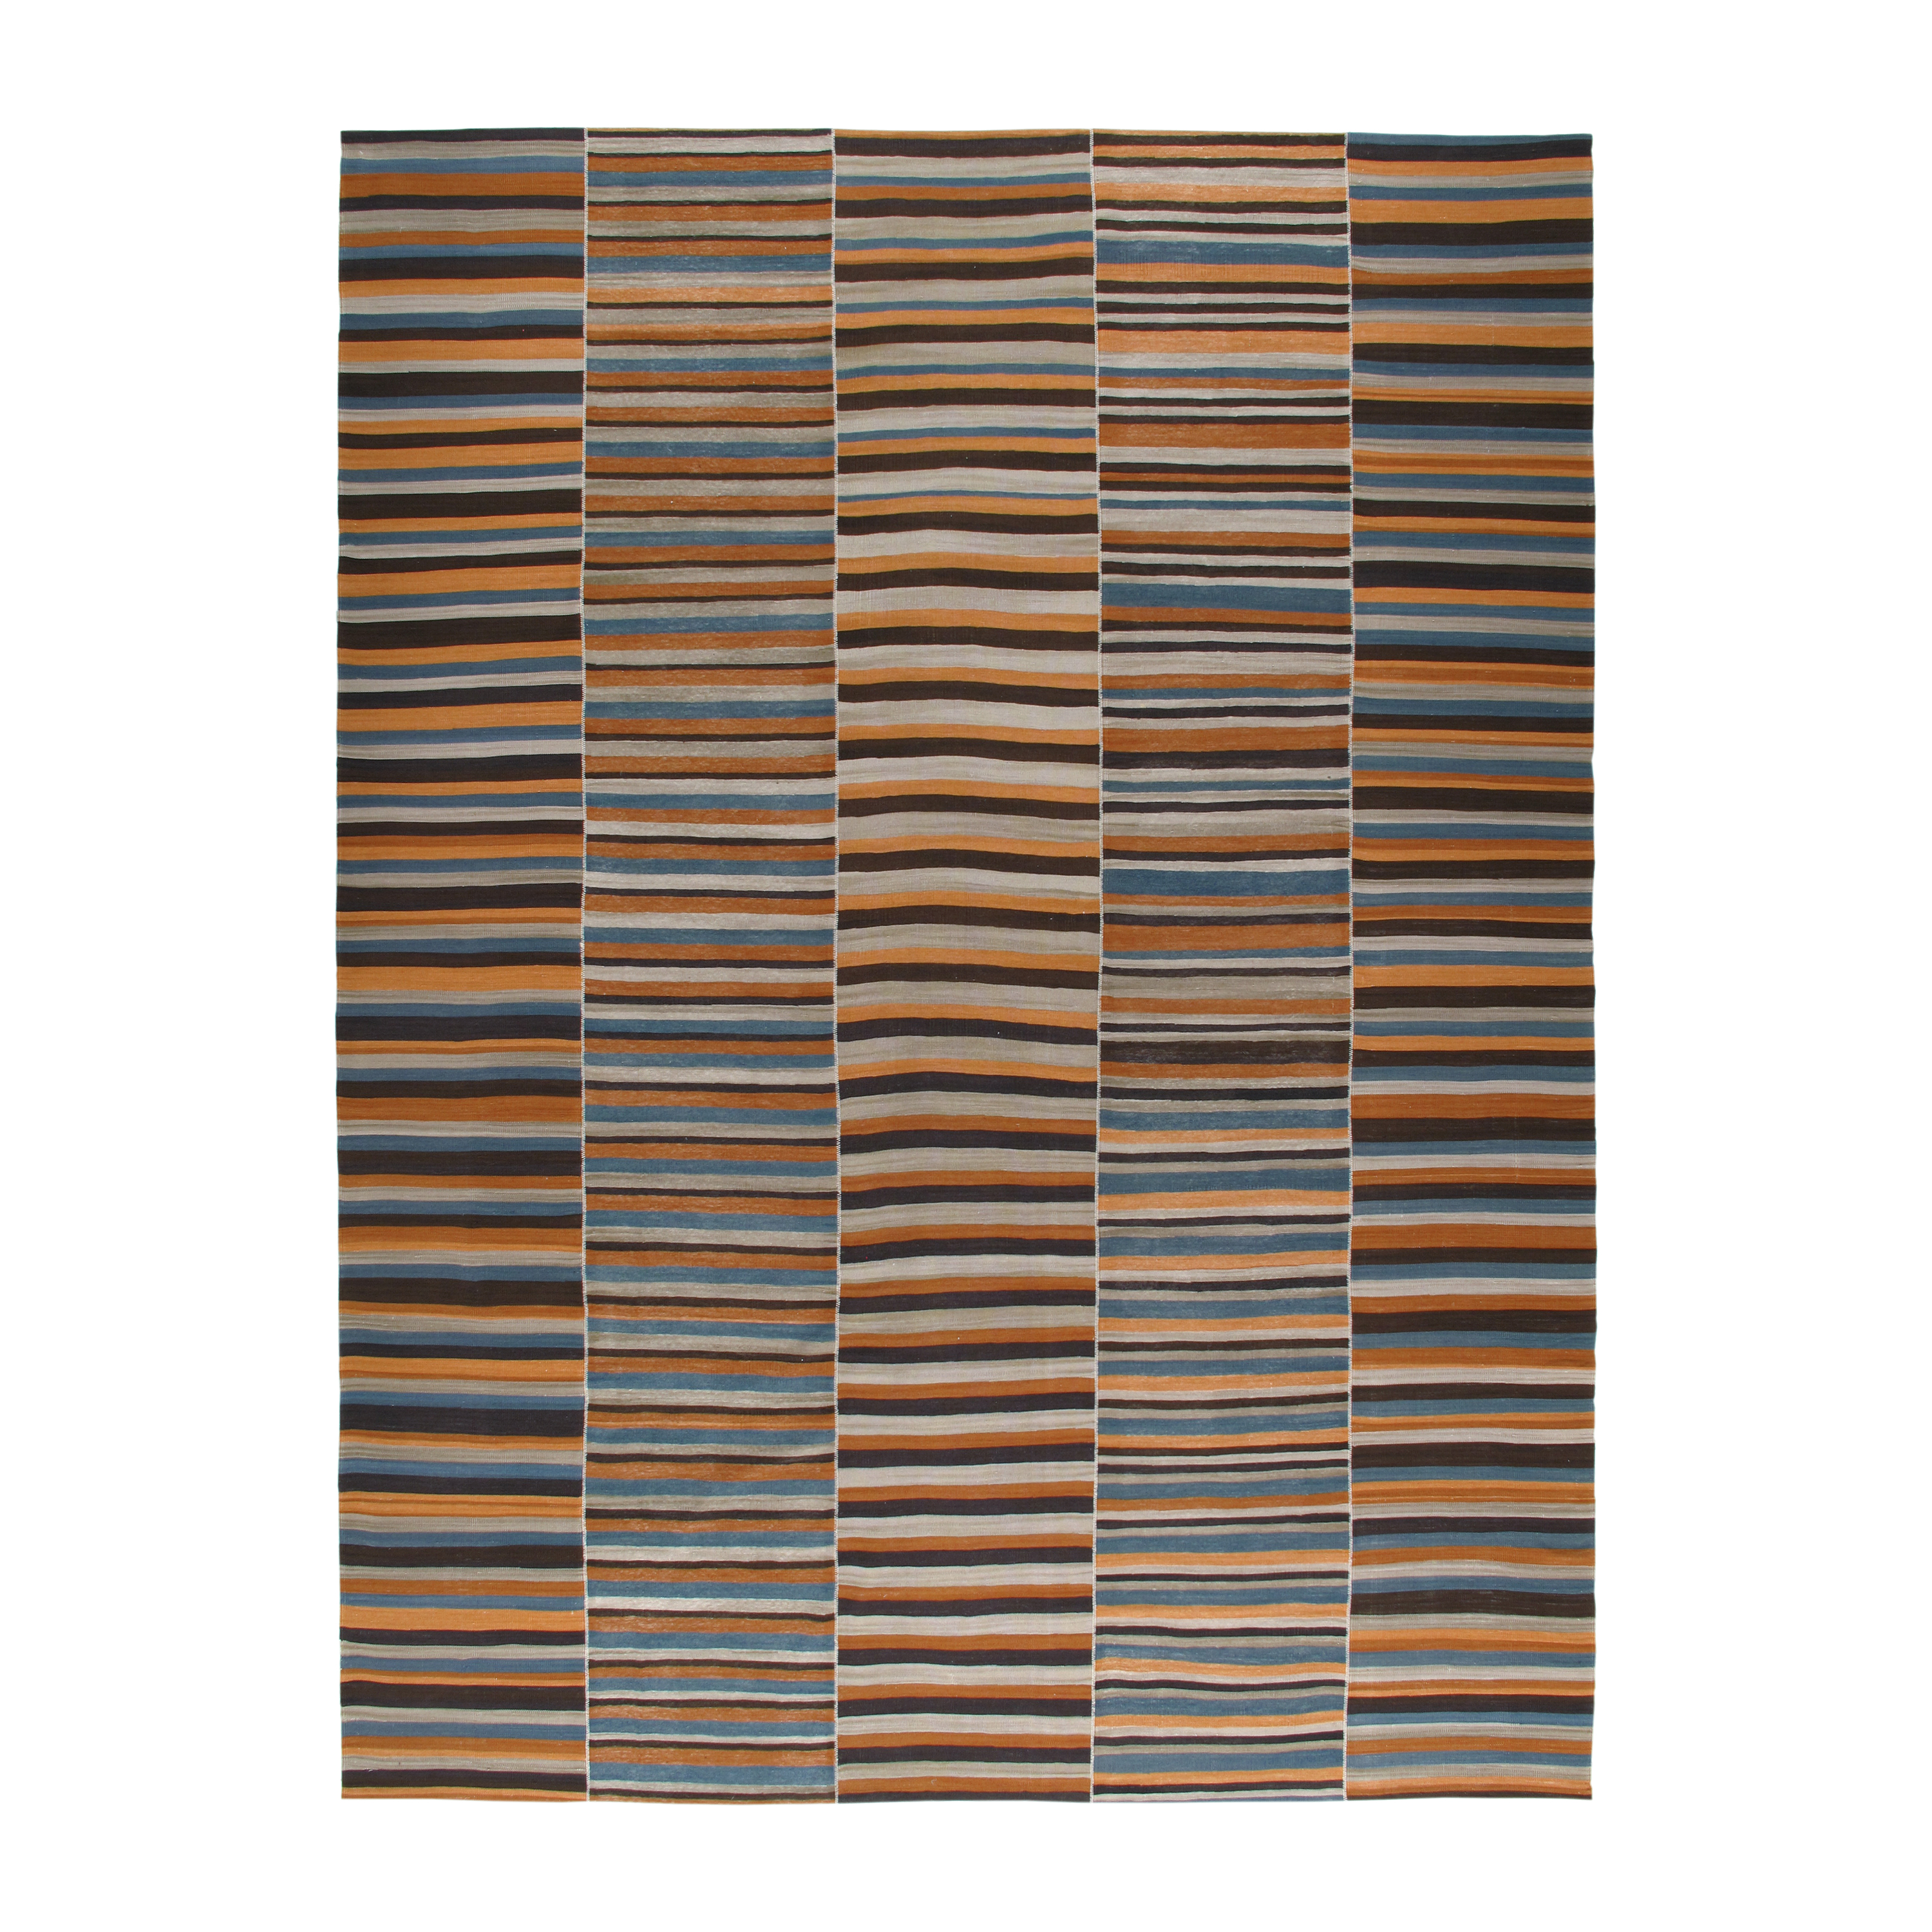 This Mazandaran rug resembles of modern and minimalist design